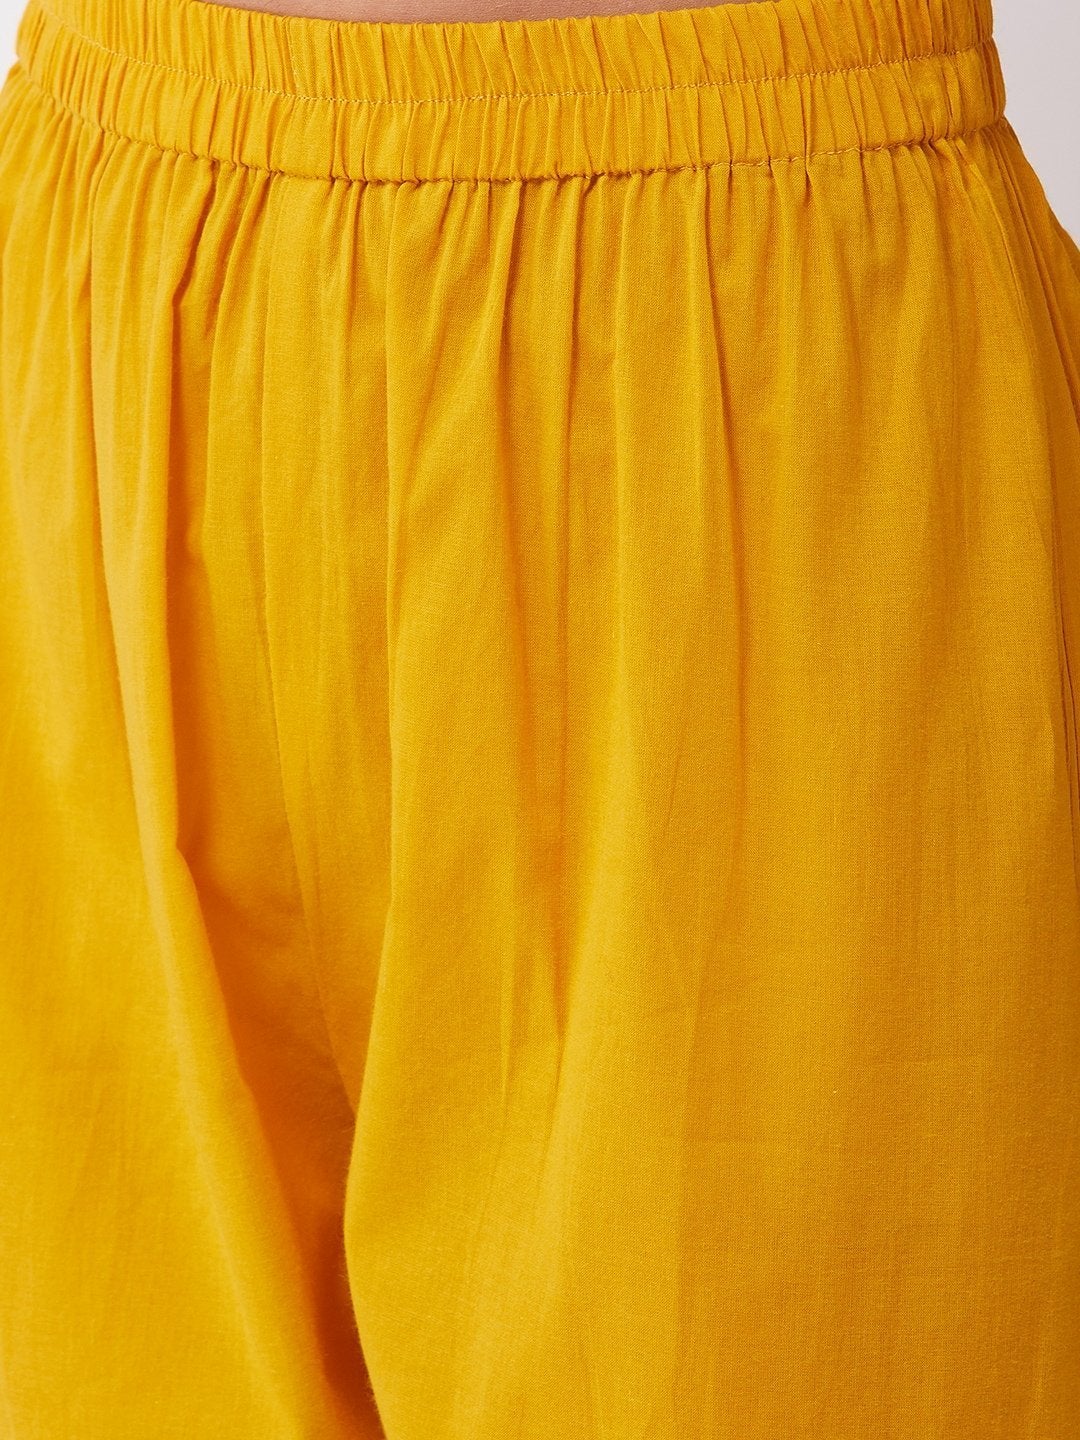 Women's Mustard Mughal Print Slit Kurta Pant Set - InWeave